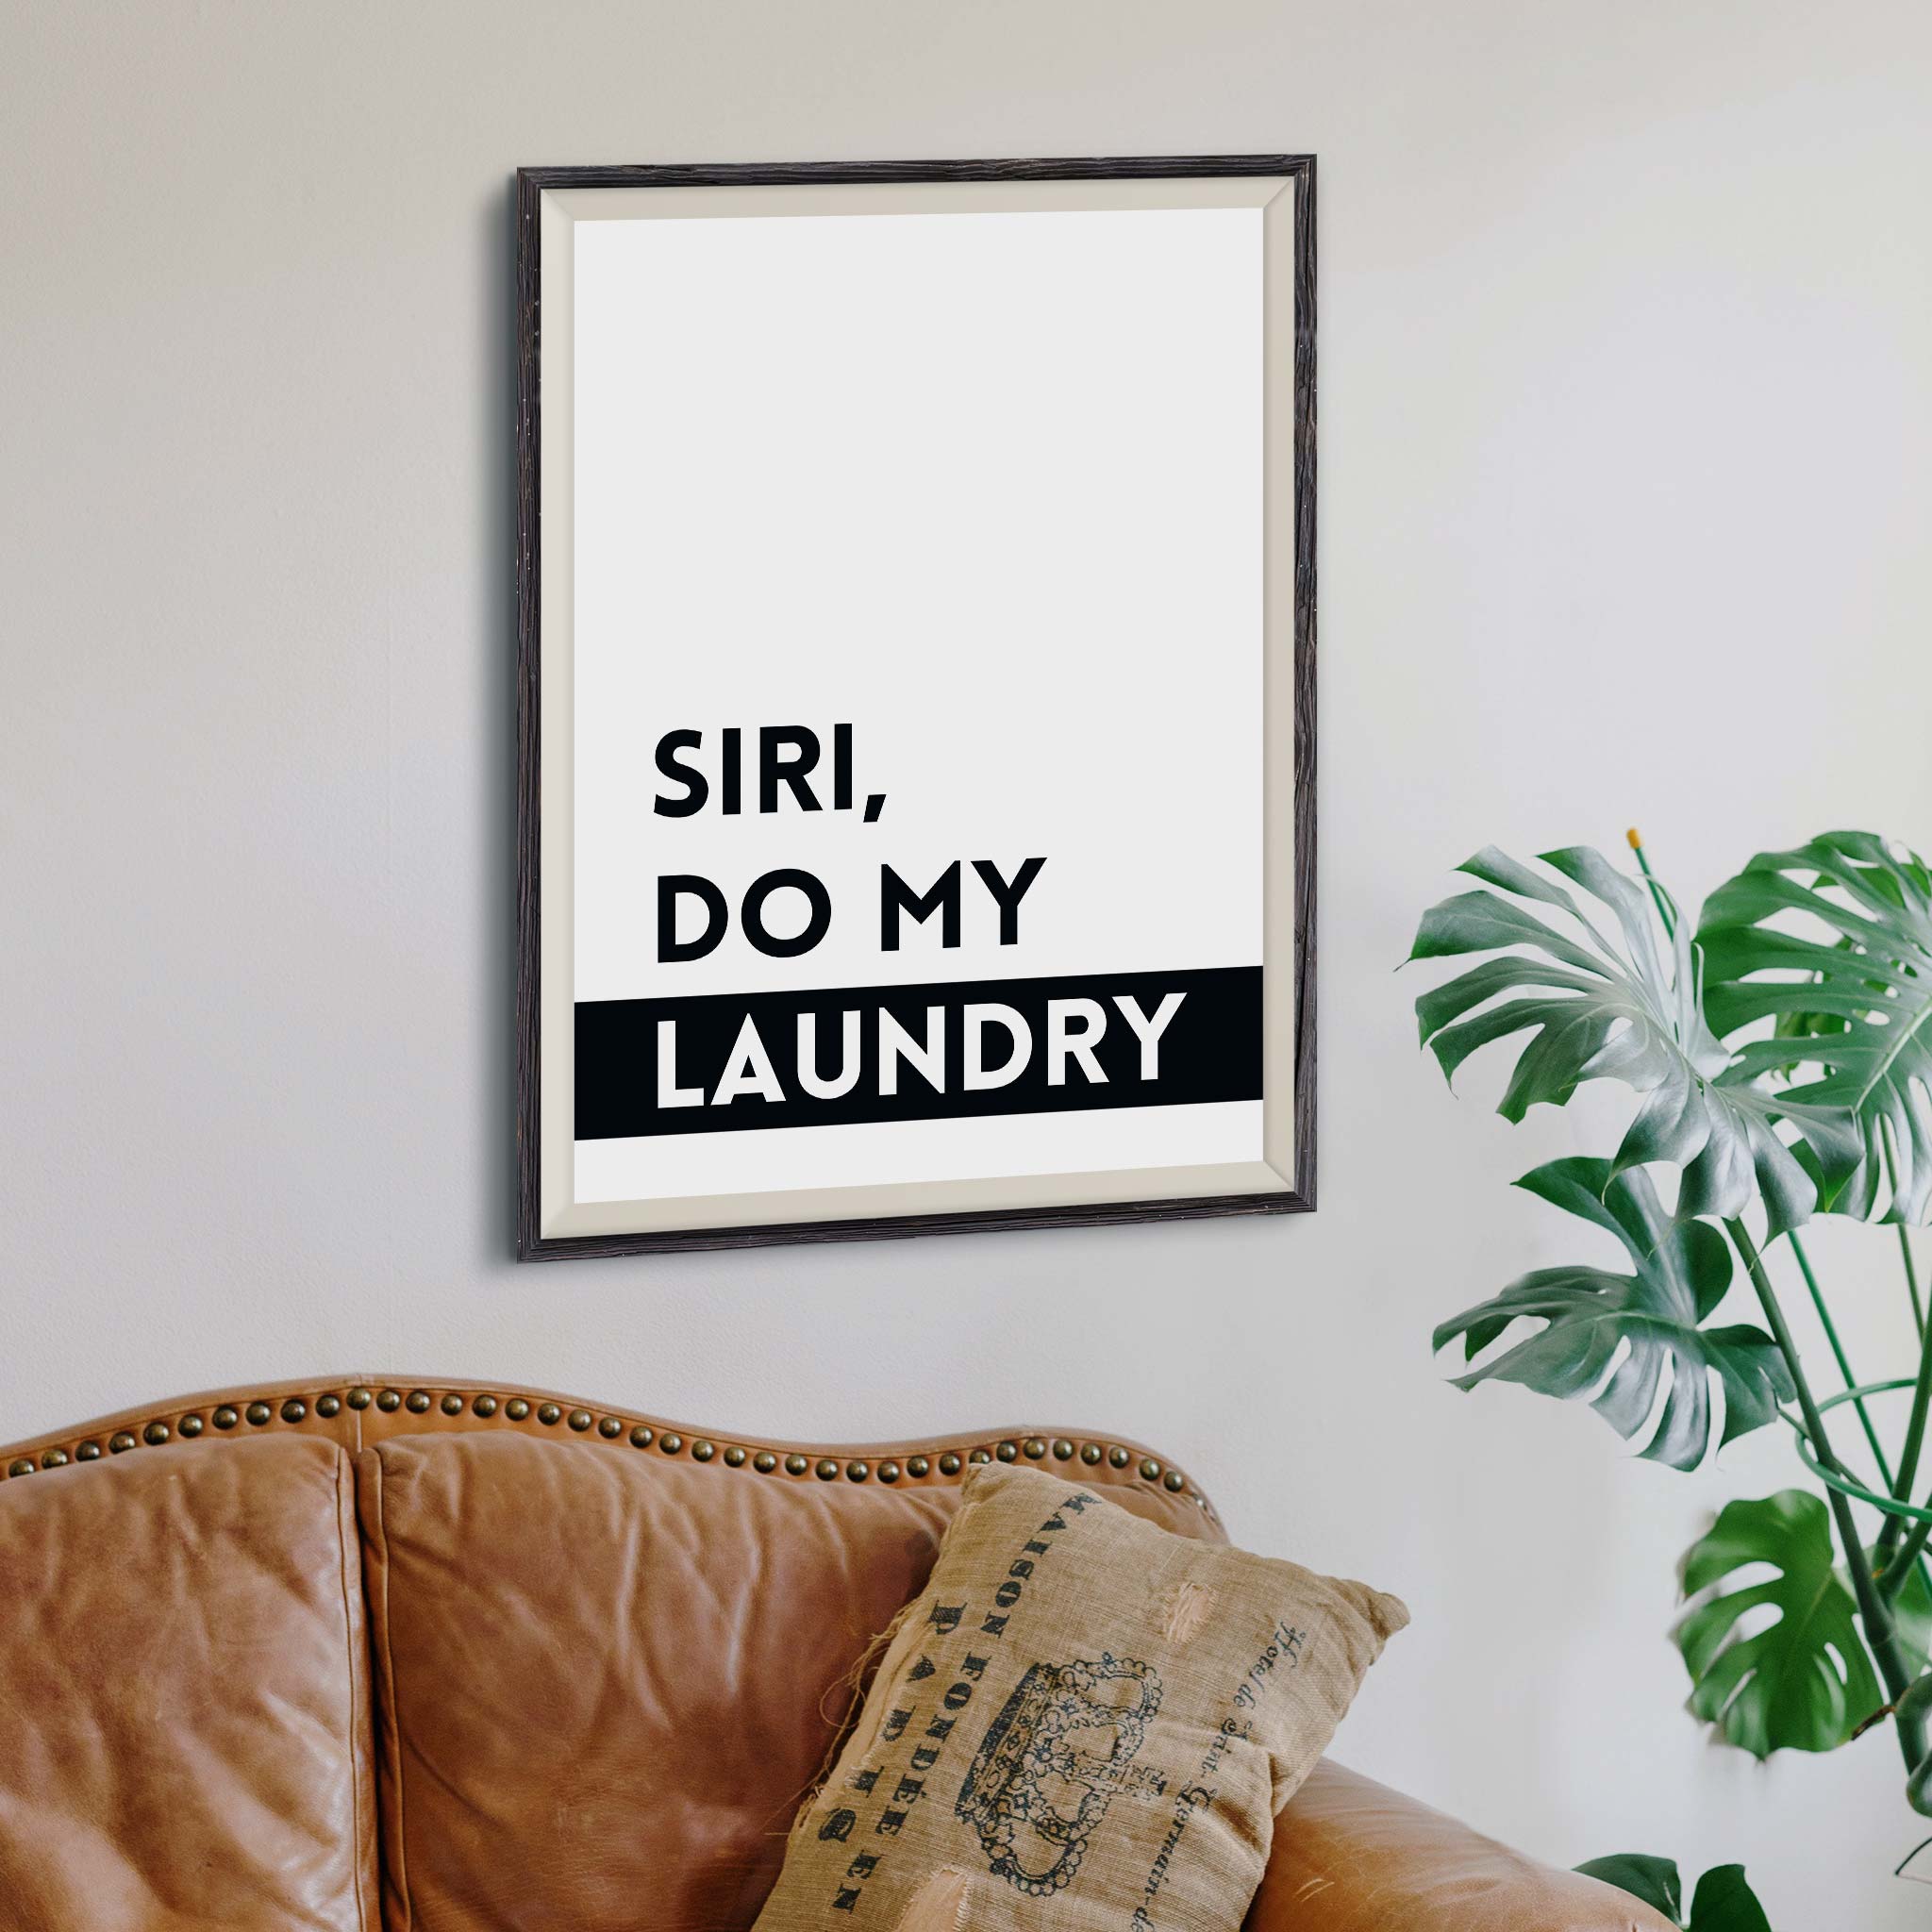 Siri, do my laundry